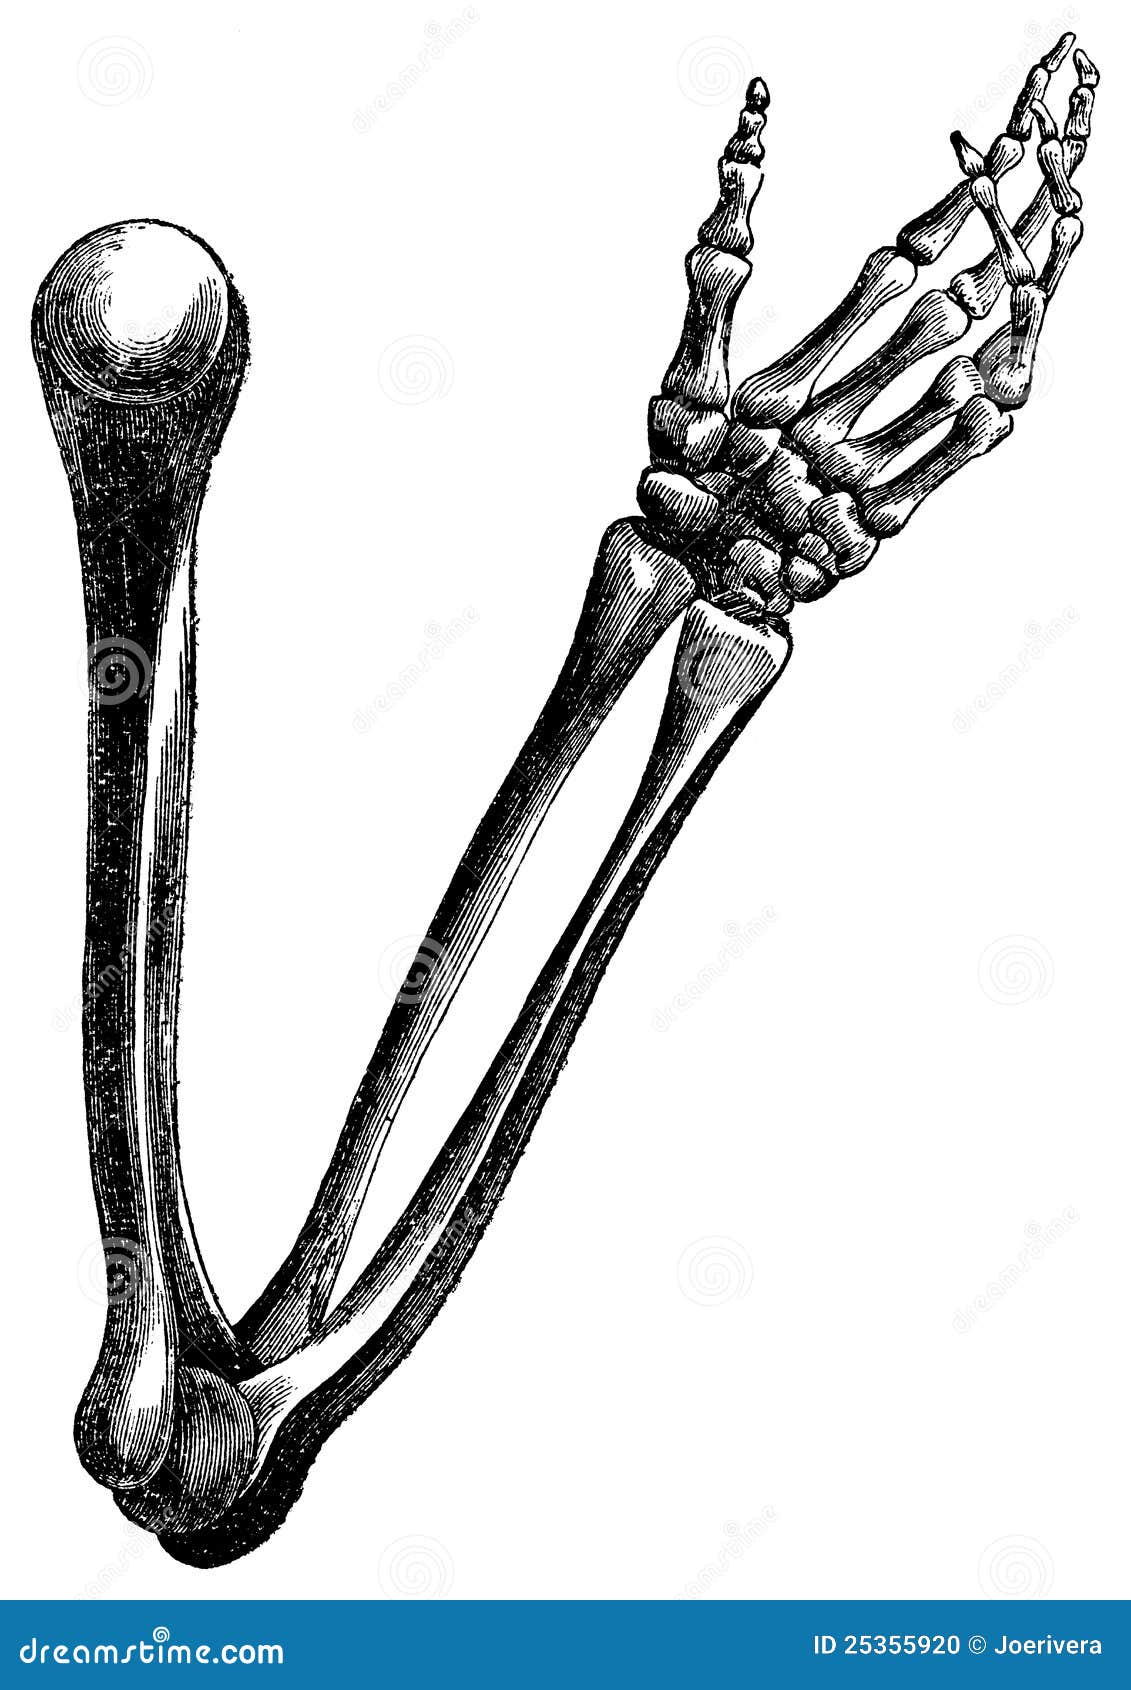 vintage engraving of arm bones on white